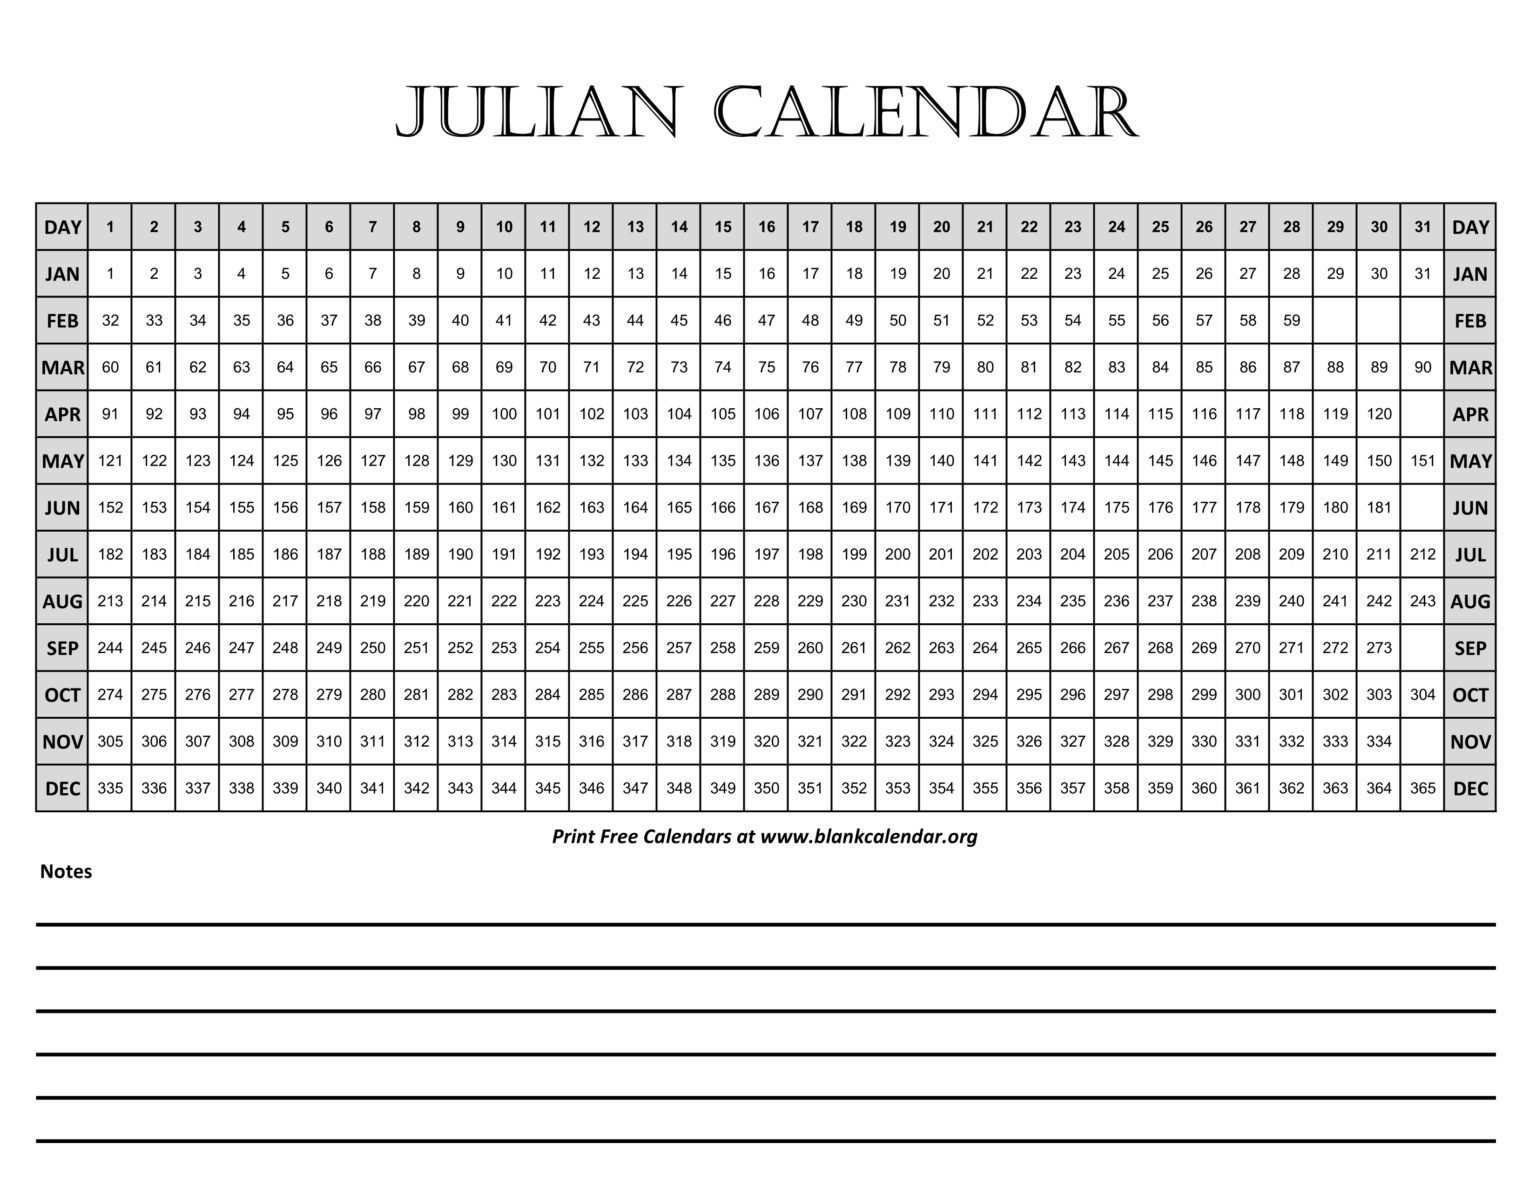 Julian Calendar – Blank Calendar